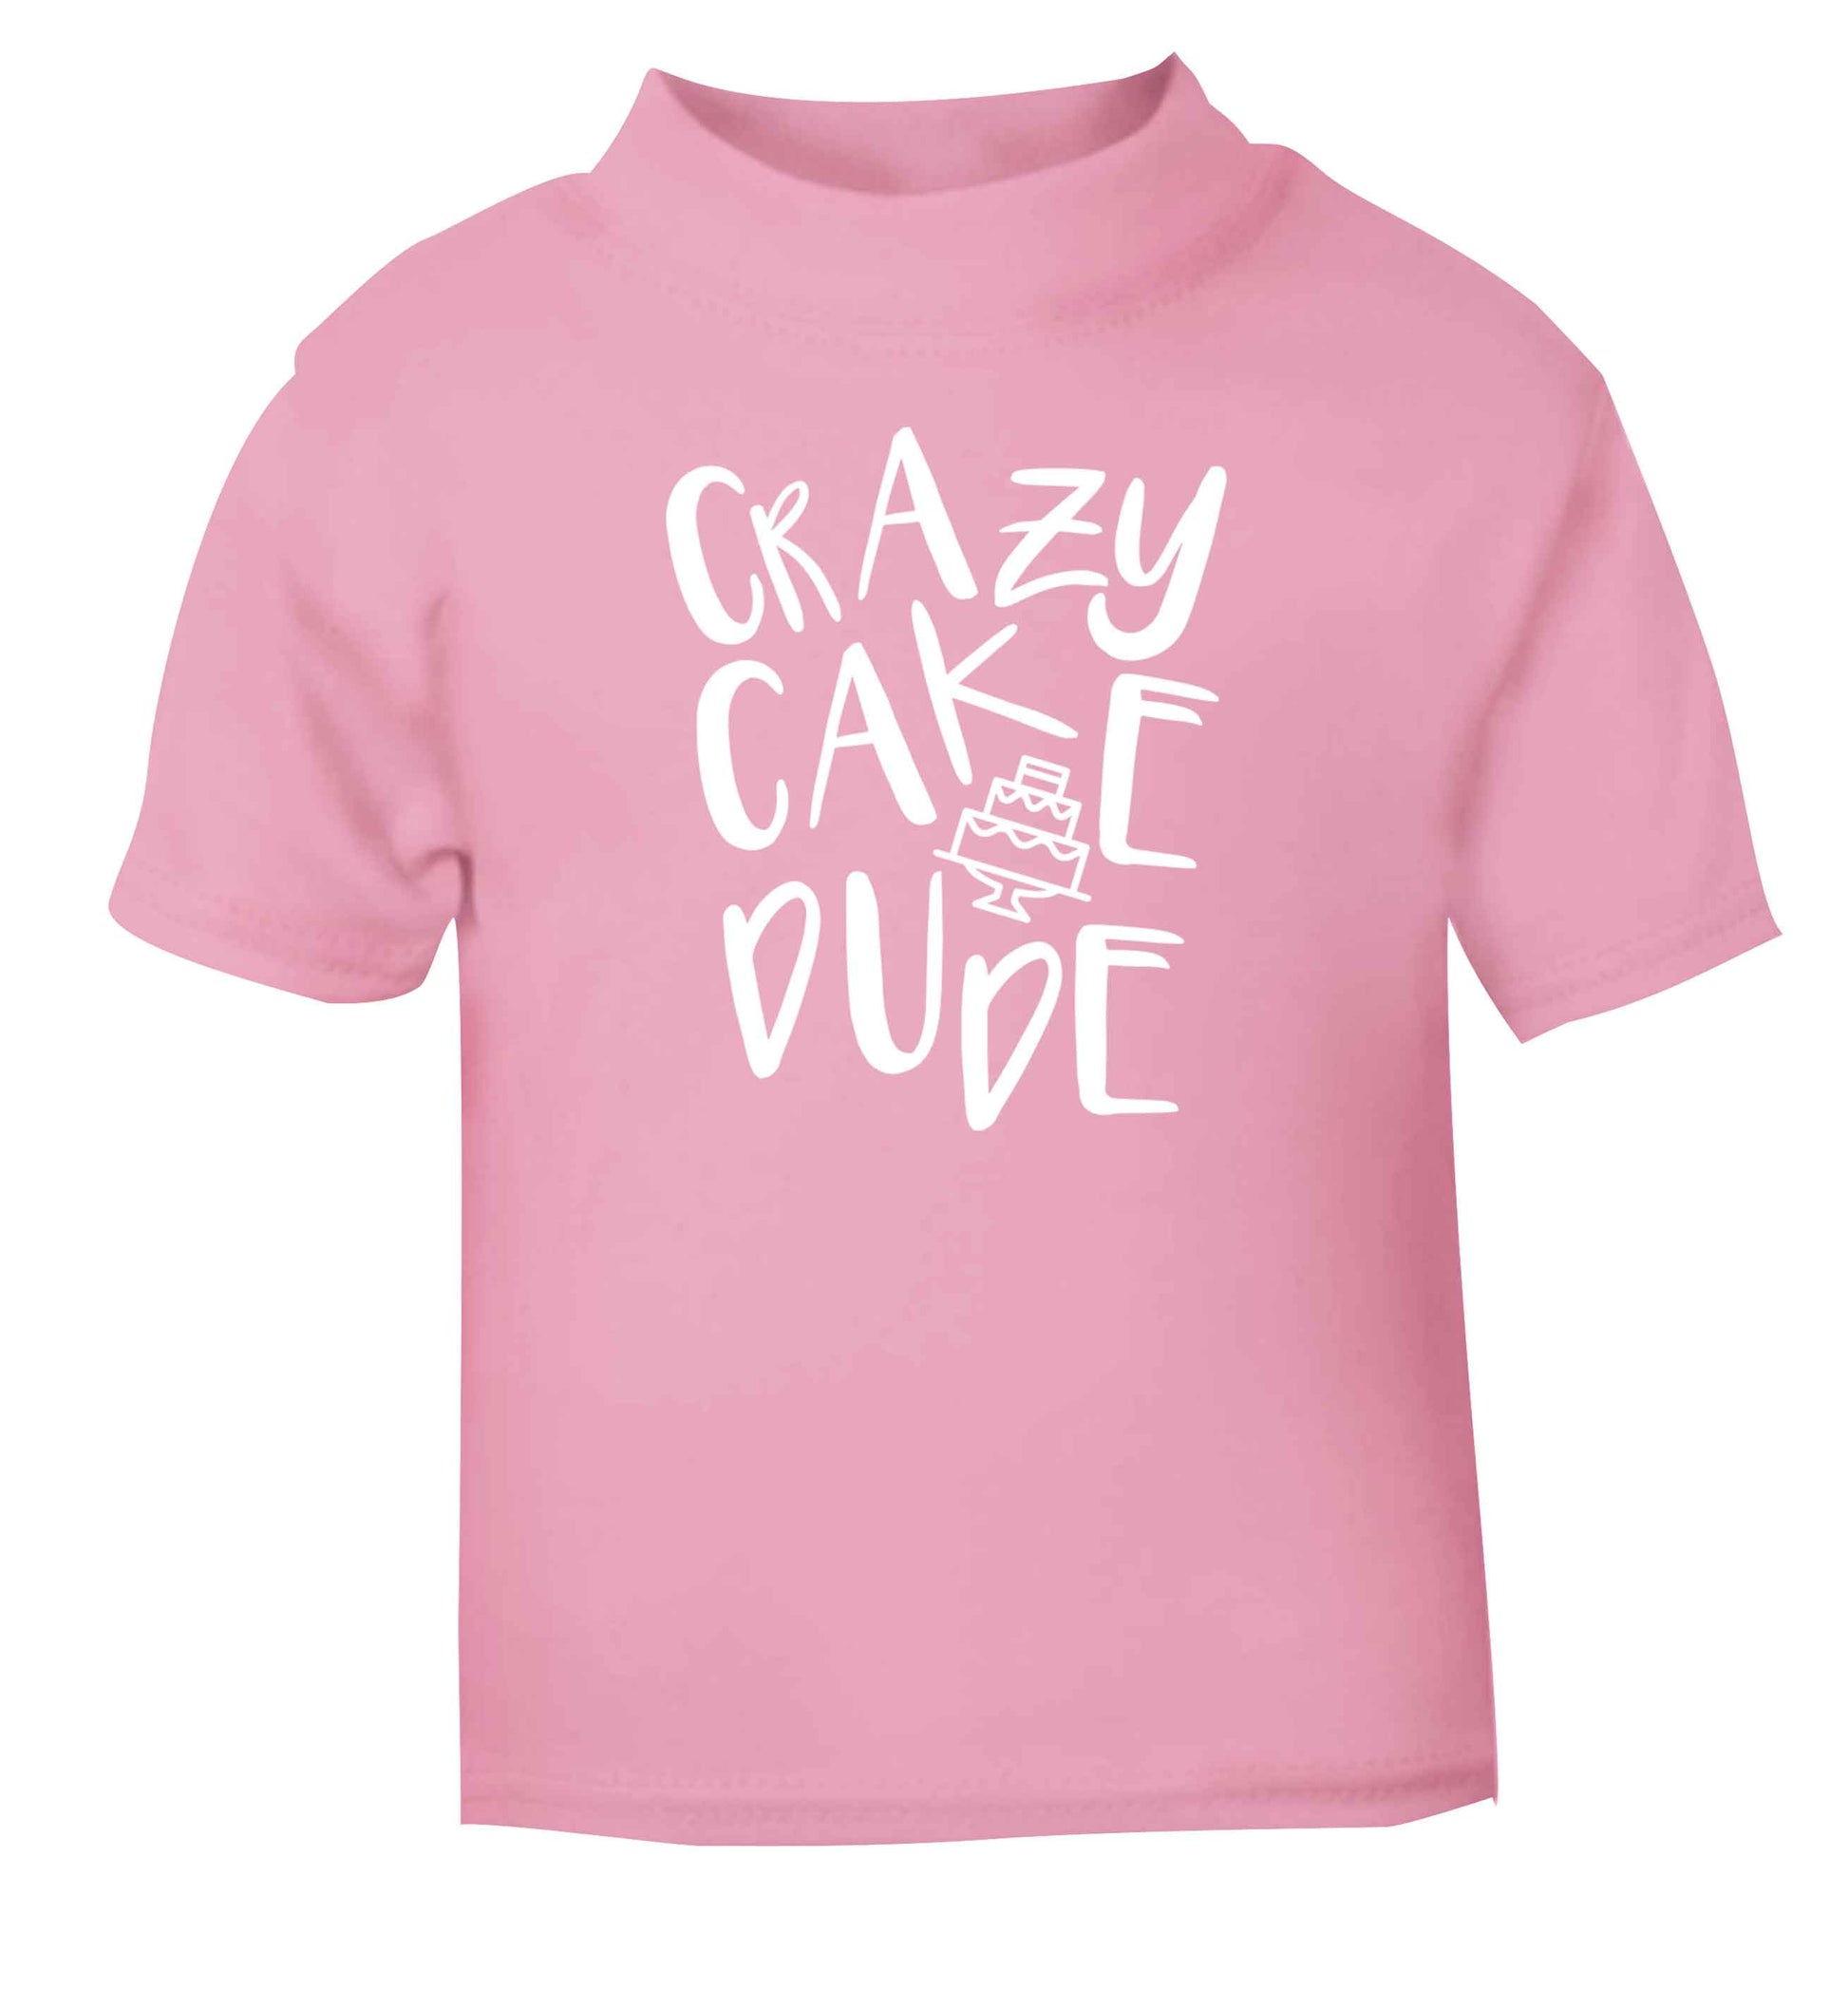 Crazy cake dude light pink Baby Toddler Tshirt 2 Years